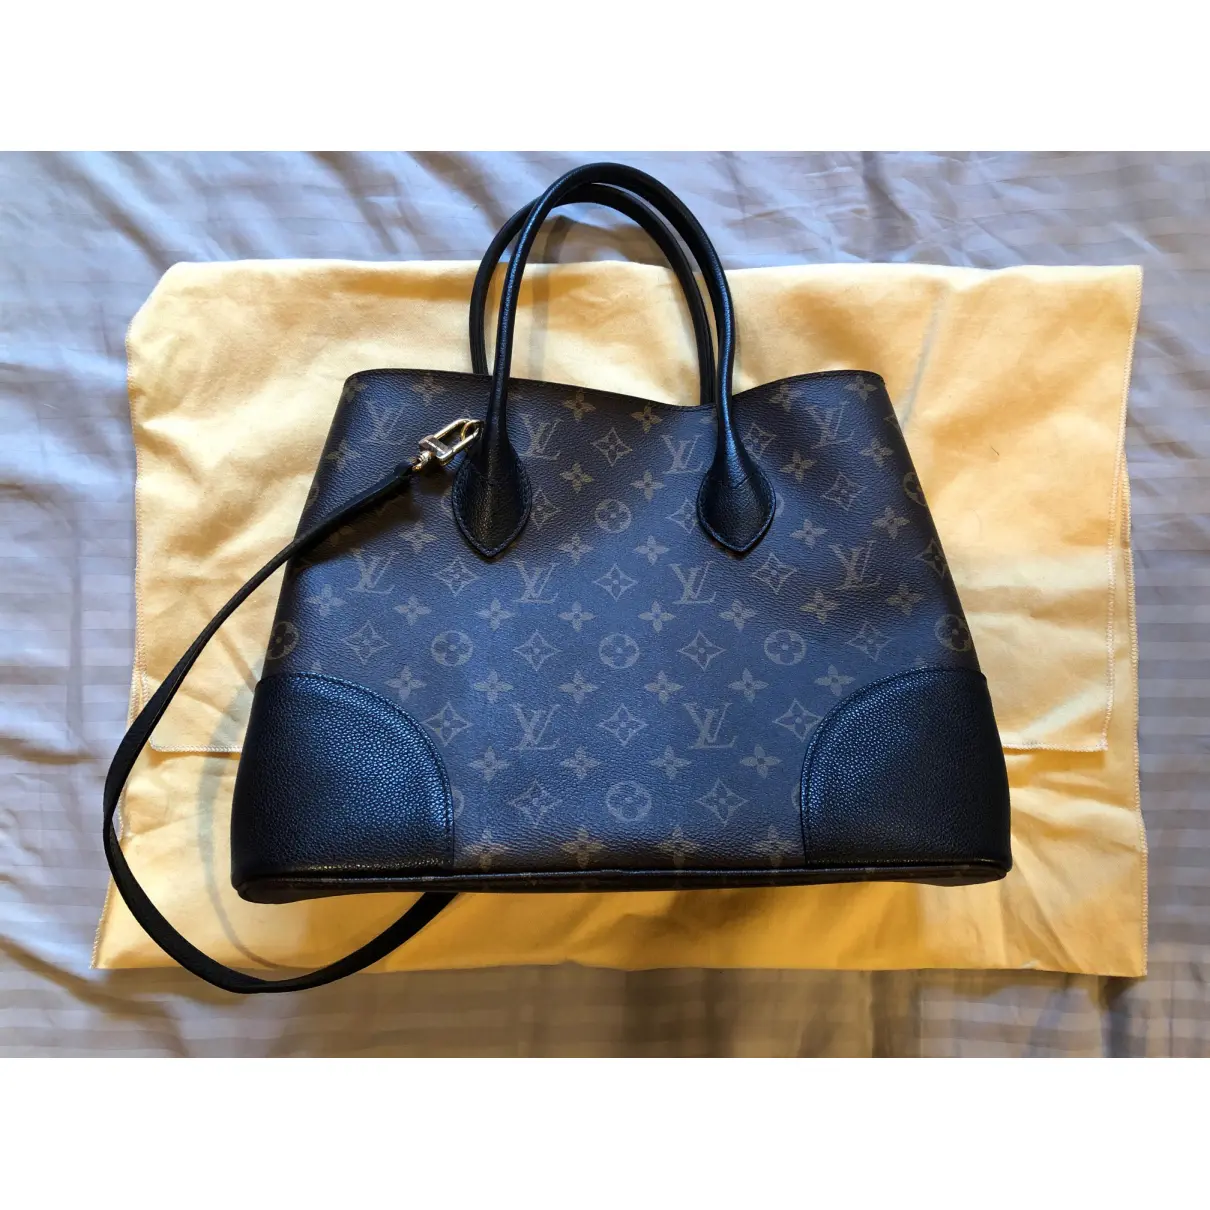 Buy Louis Vuitton Flandrin cloth handbag online